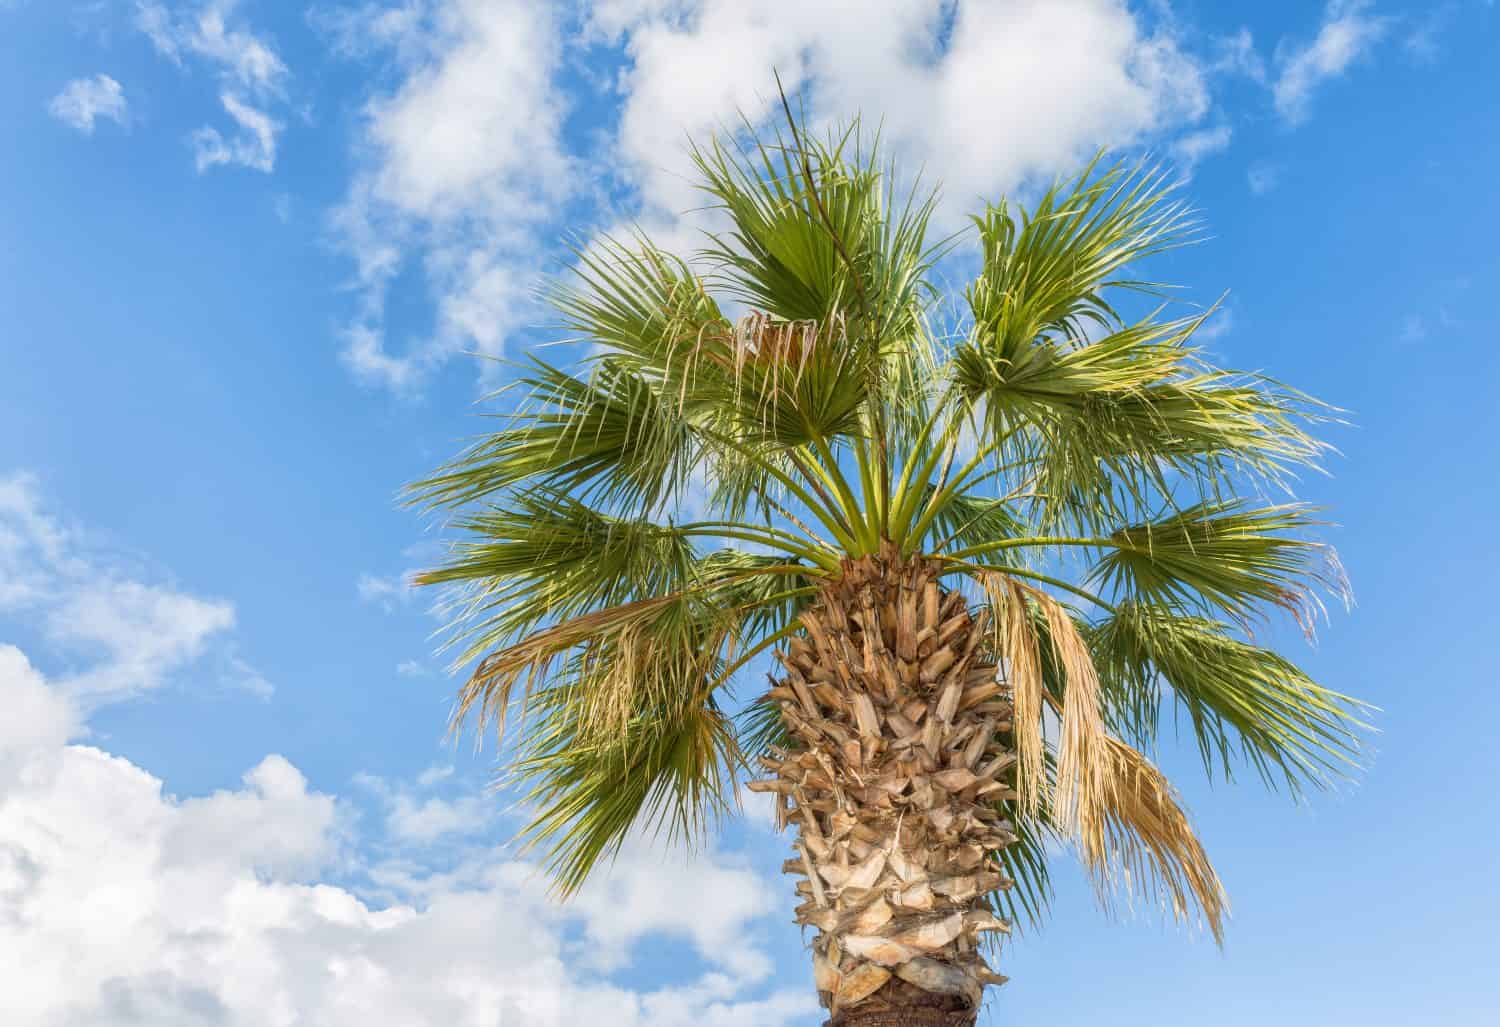 A Washingtonia filifera or California Fan Palm tree photographed against a blue cloudy sky. 